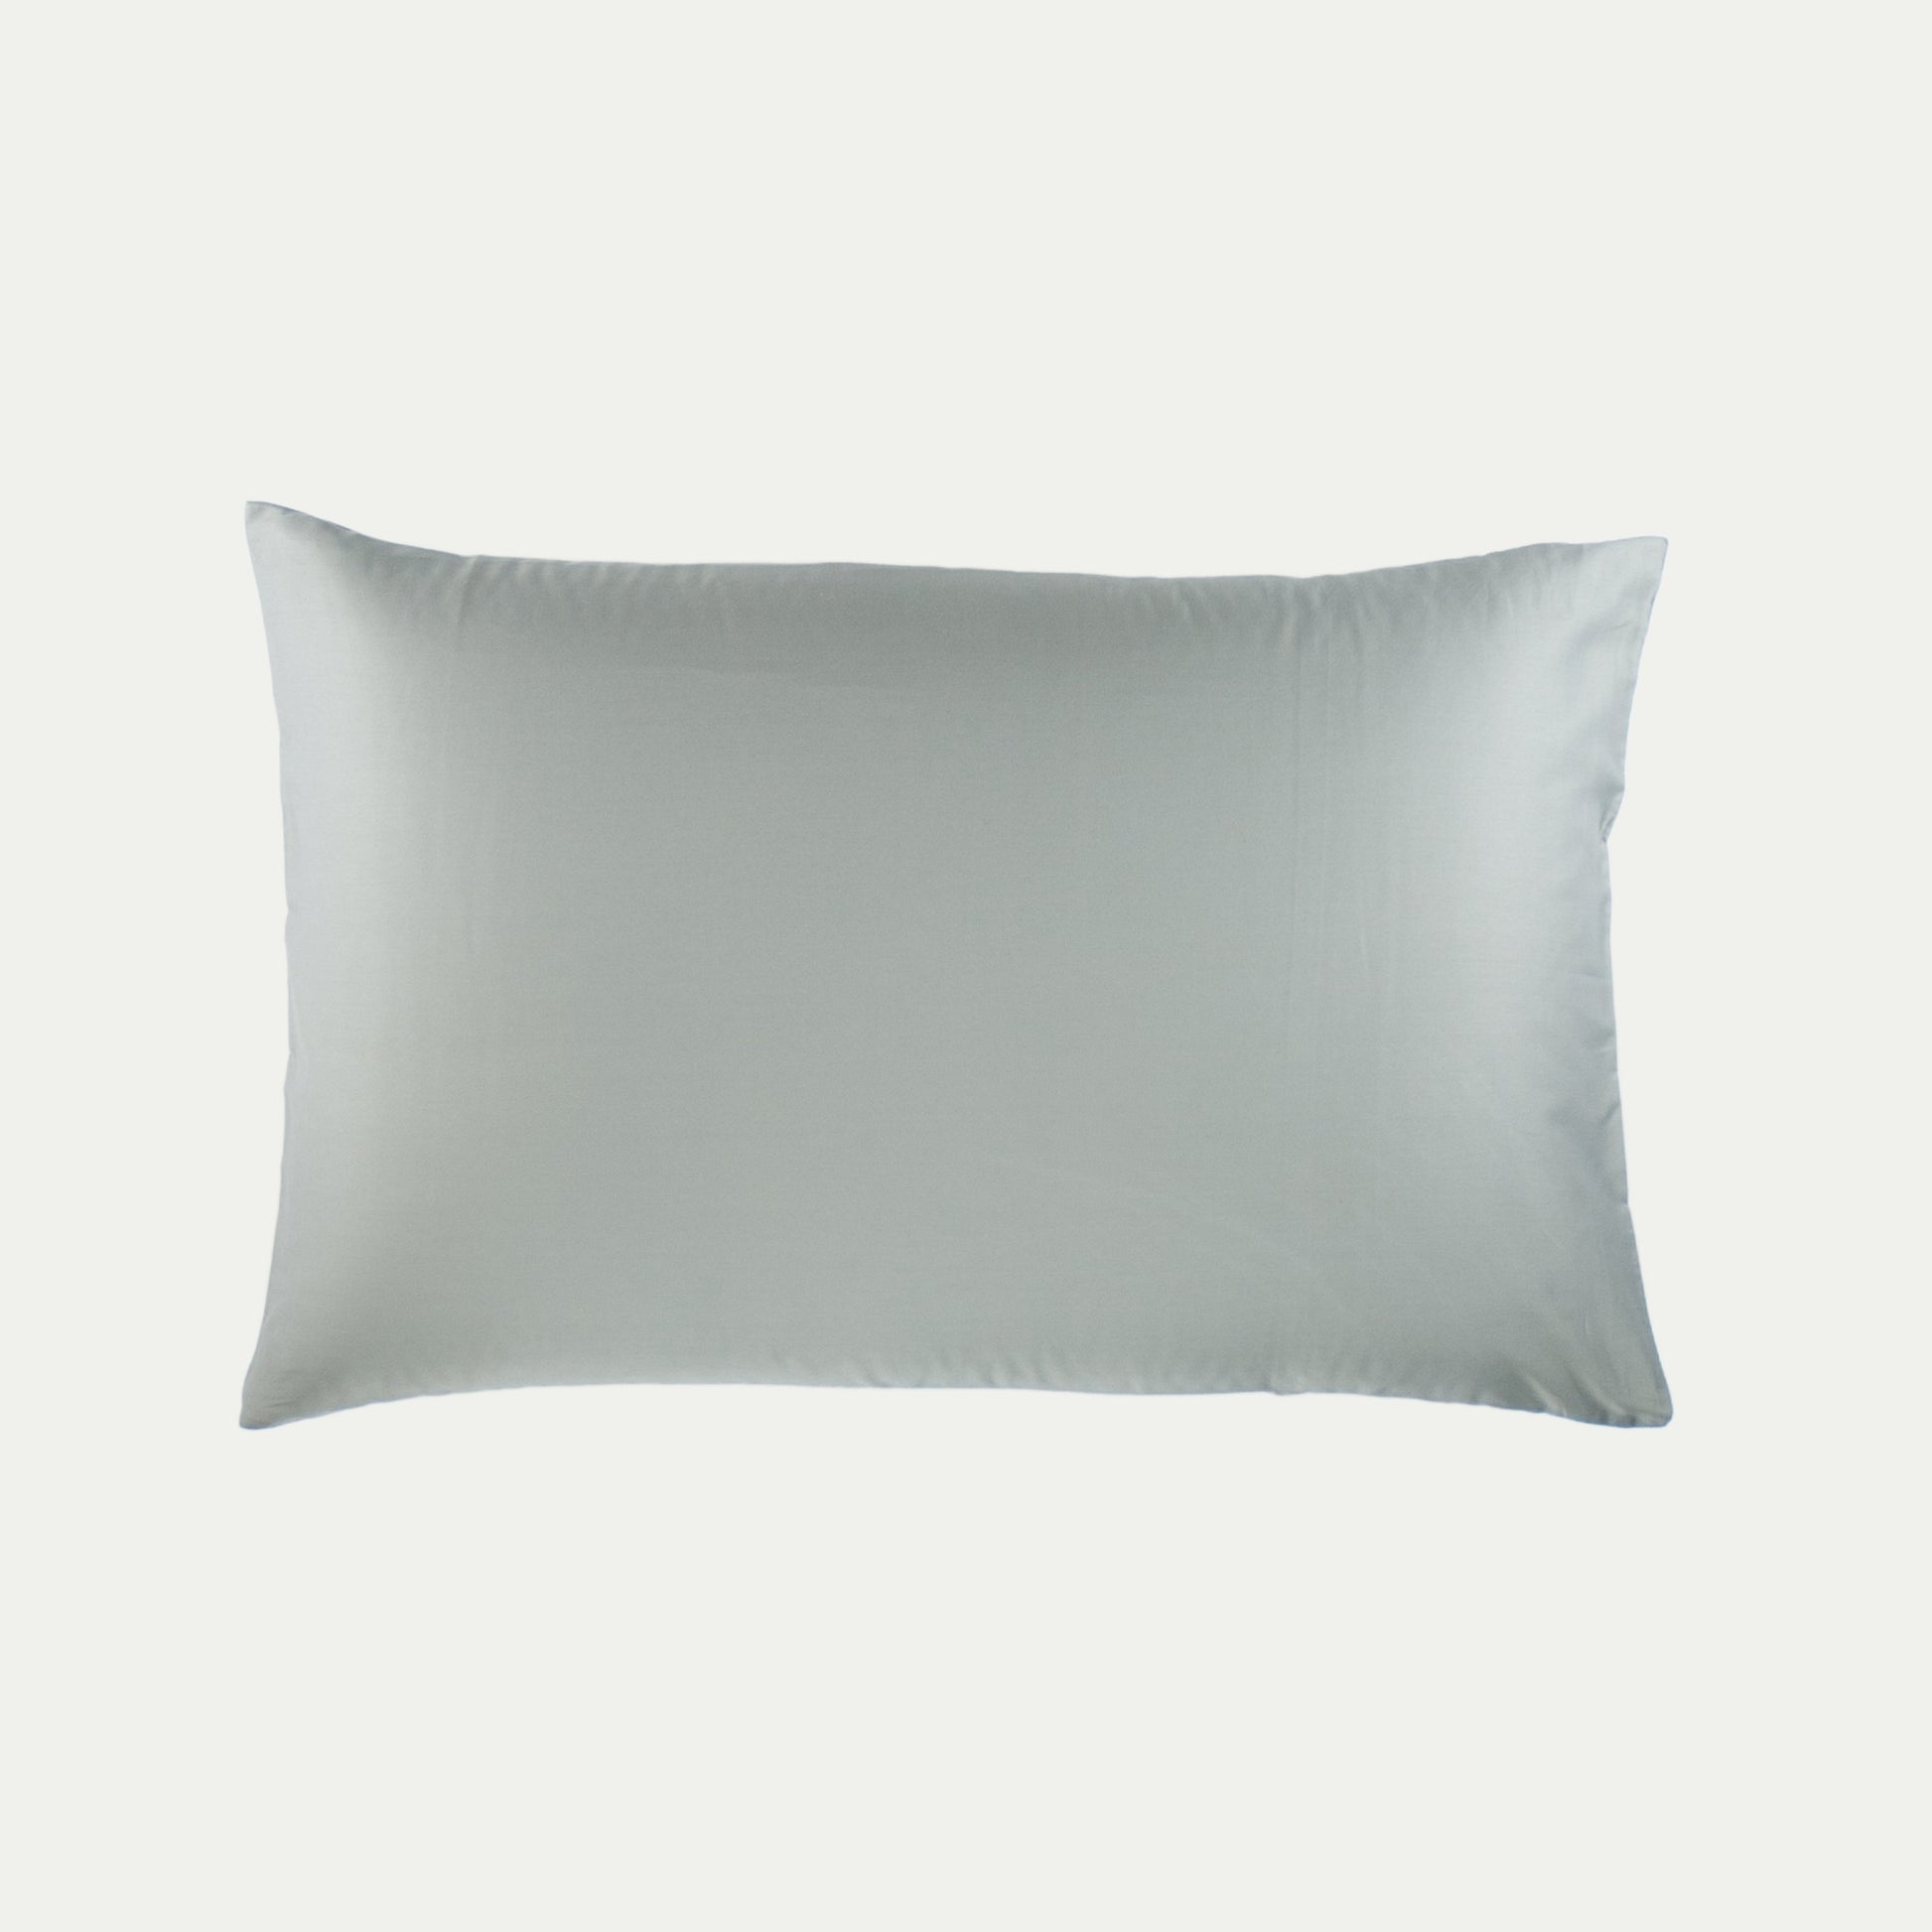 Organic cotton pillowcase in sleet grey